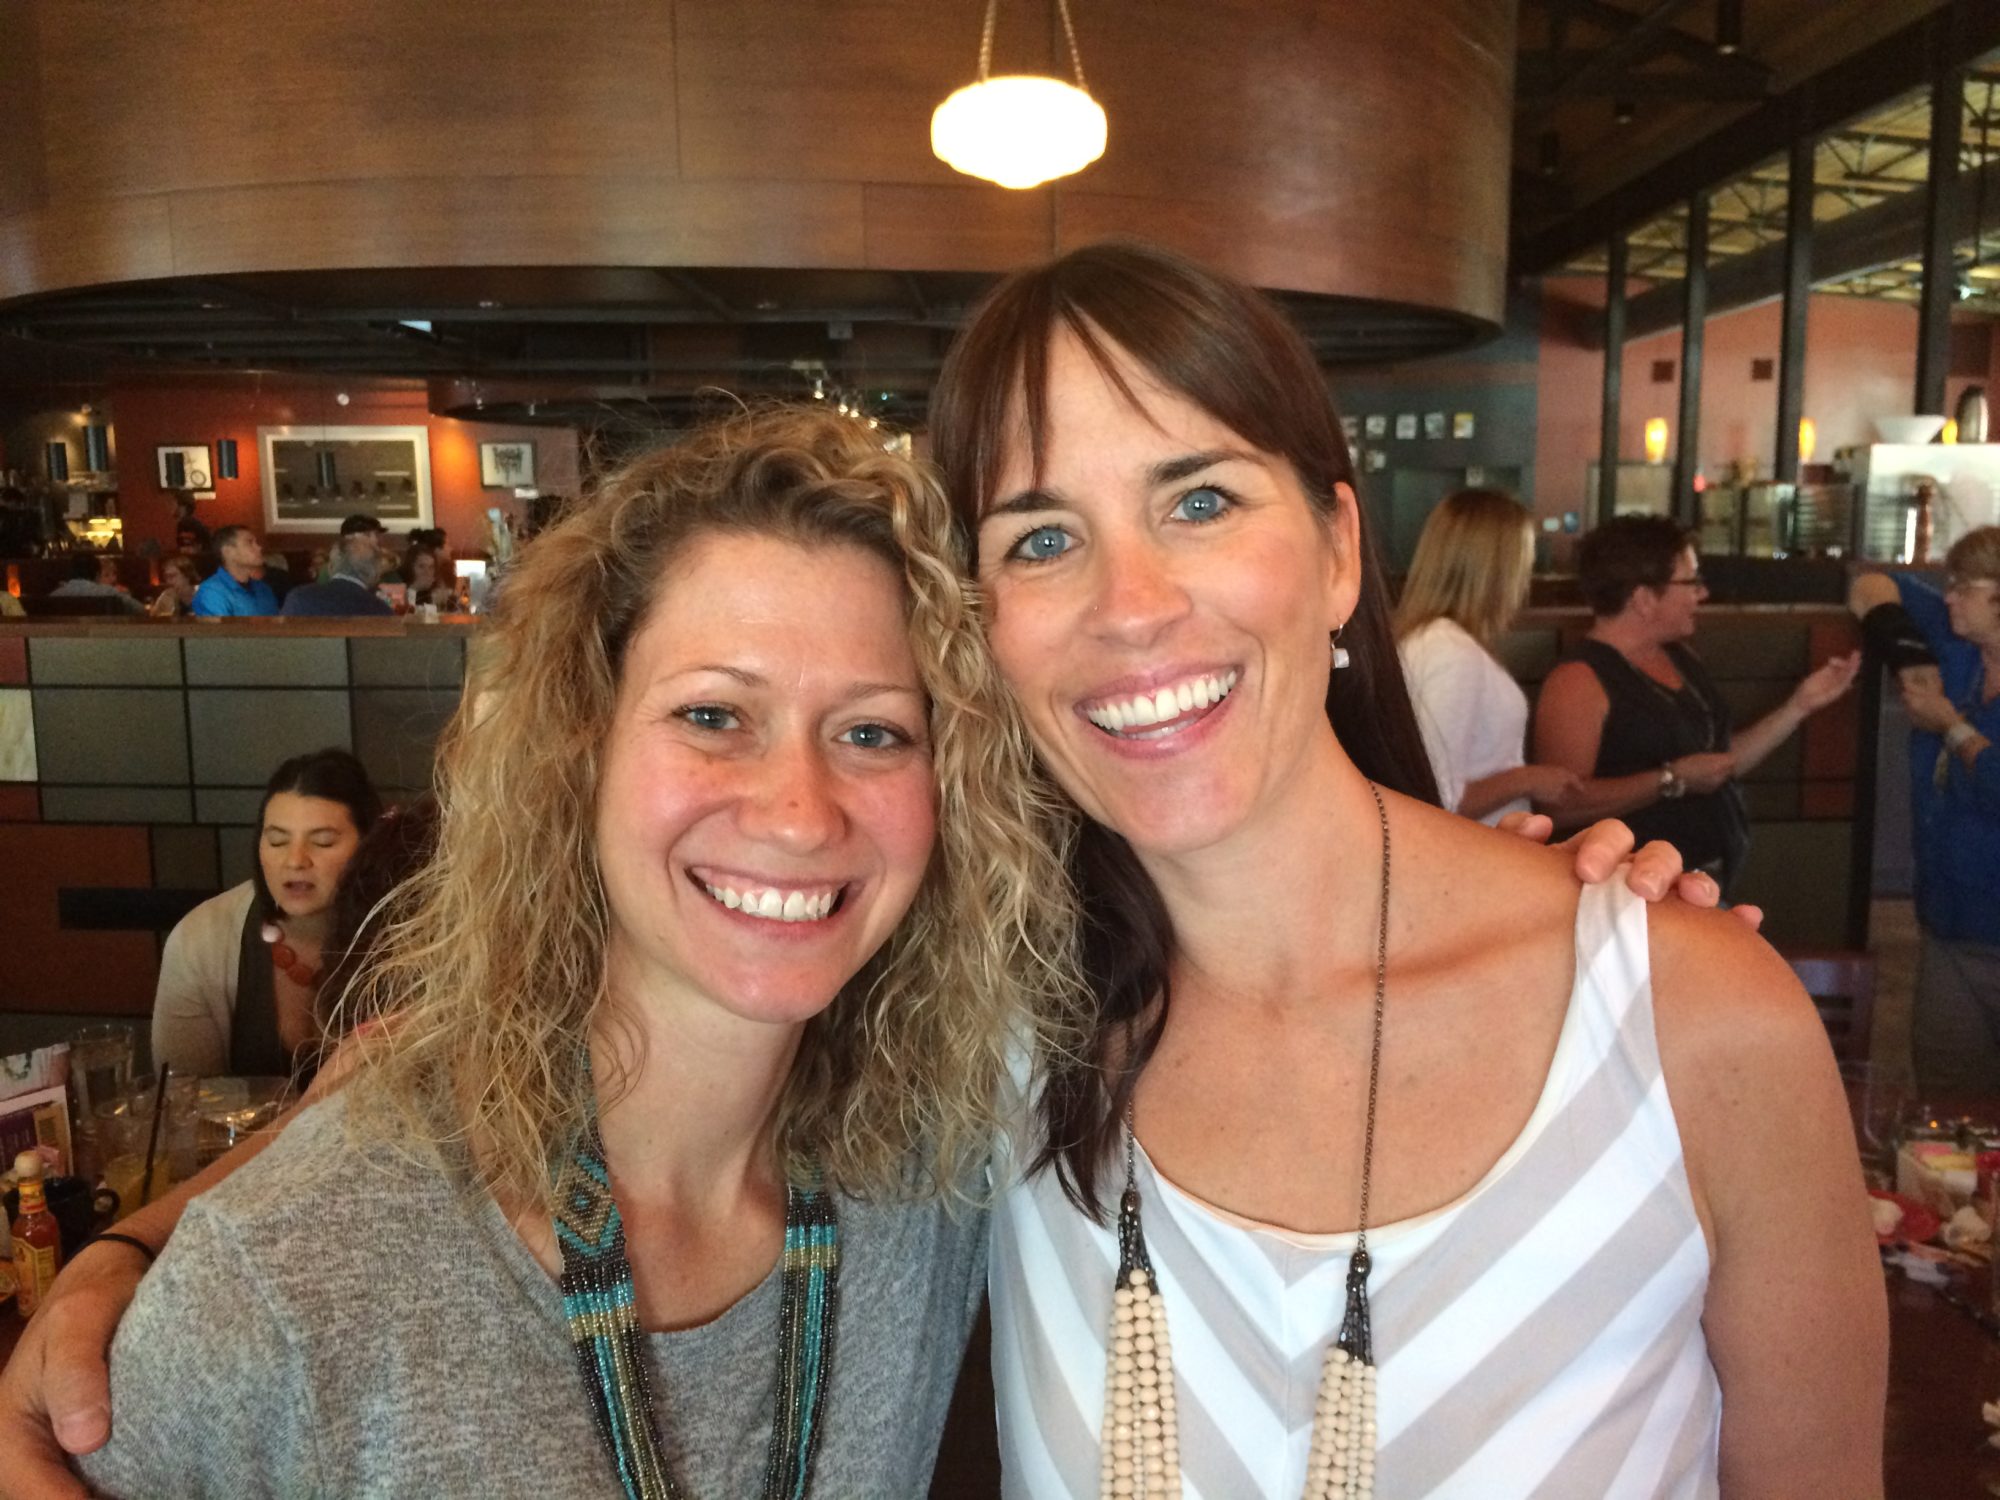 Founder Kara Wiegand and Fair Trade Partner Emily Valentine